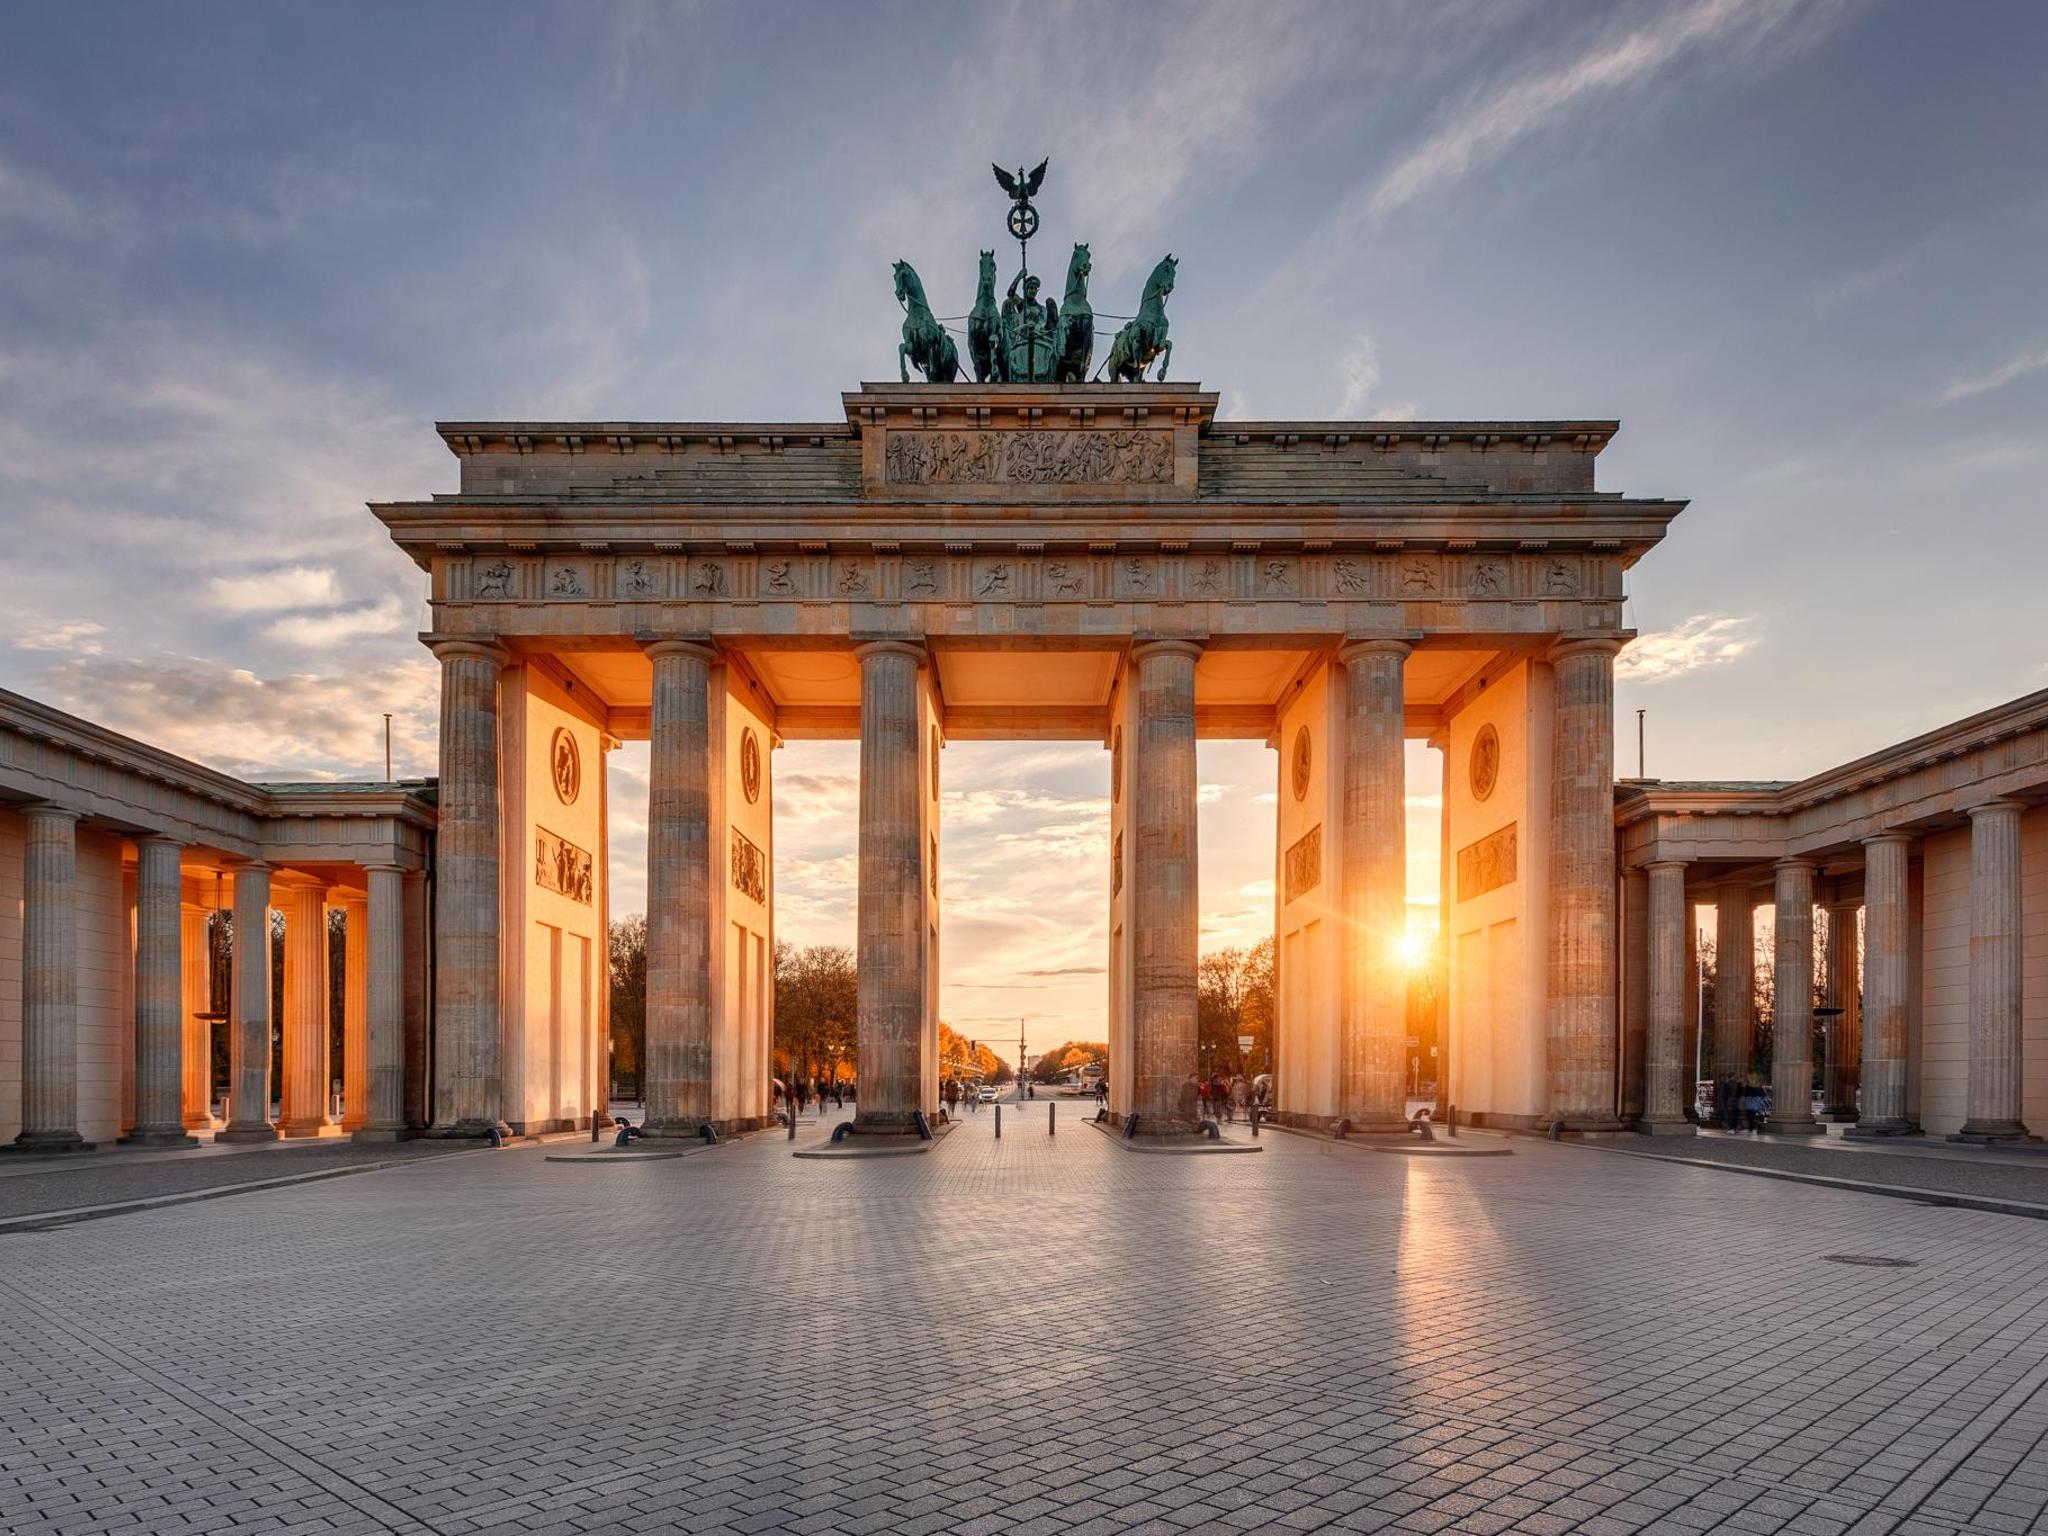 Where to stay near Berlin's Brandenburg Gate | Booking.com